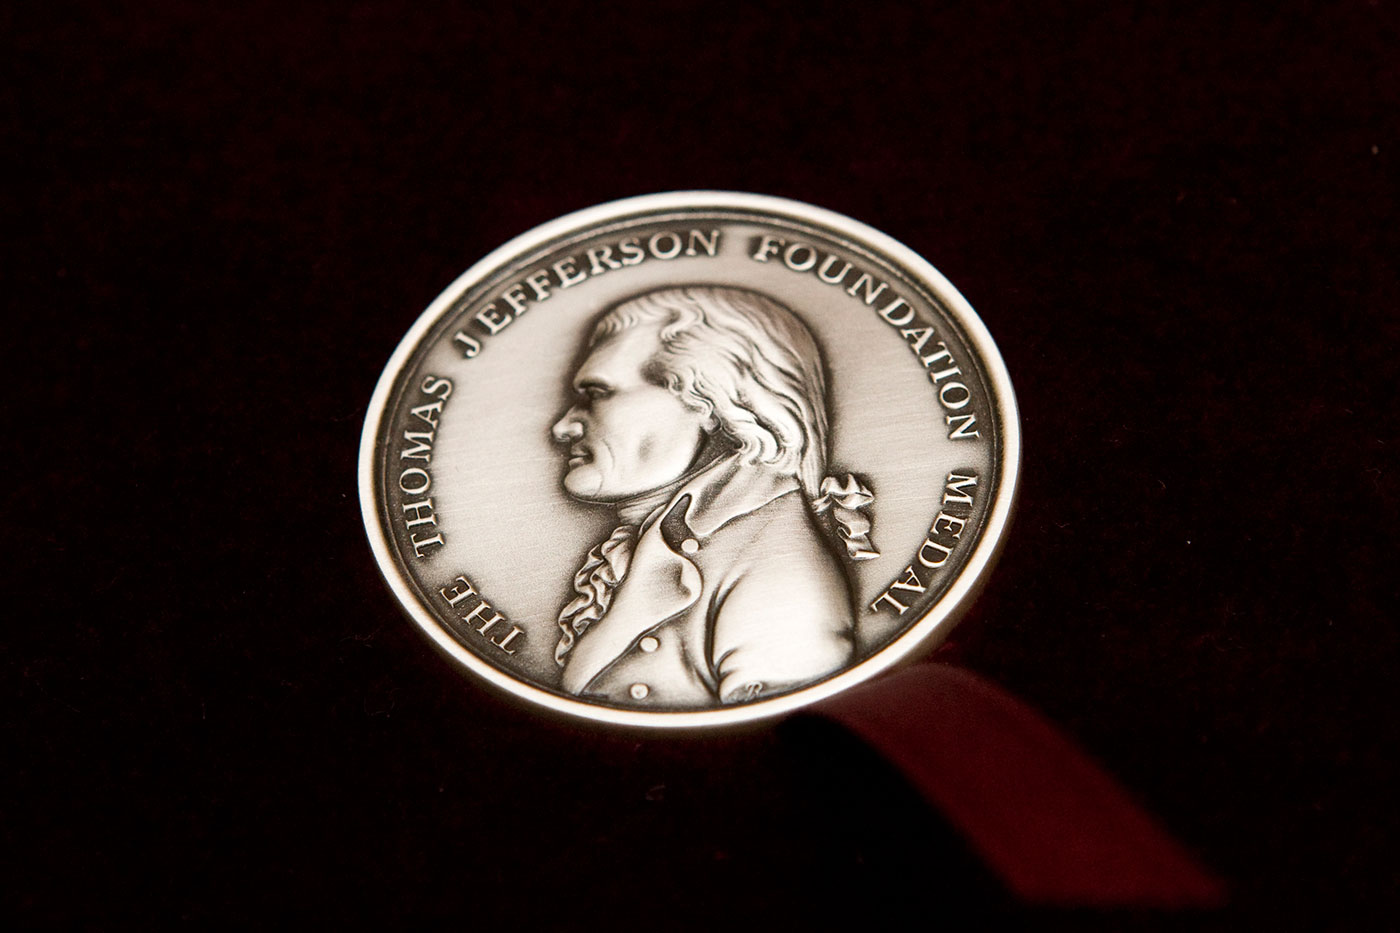 Thomas Jefferson Foundation medal coin